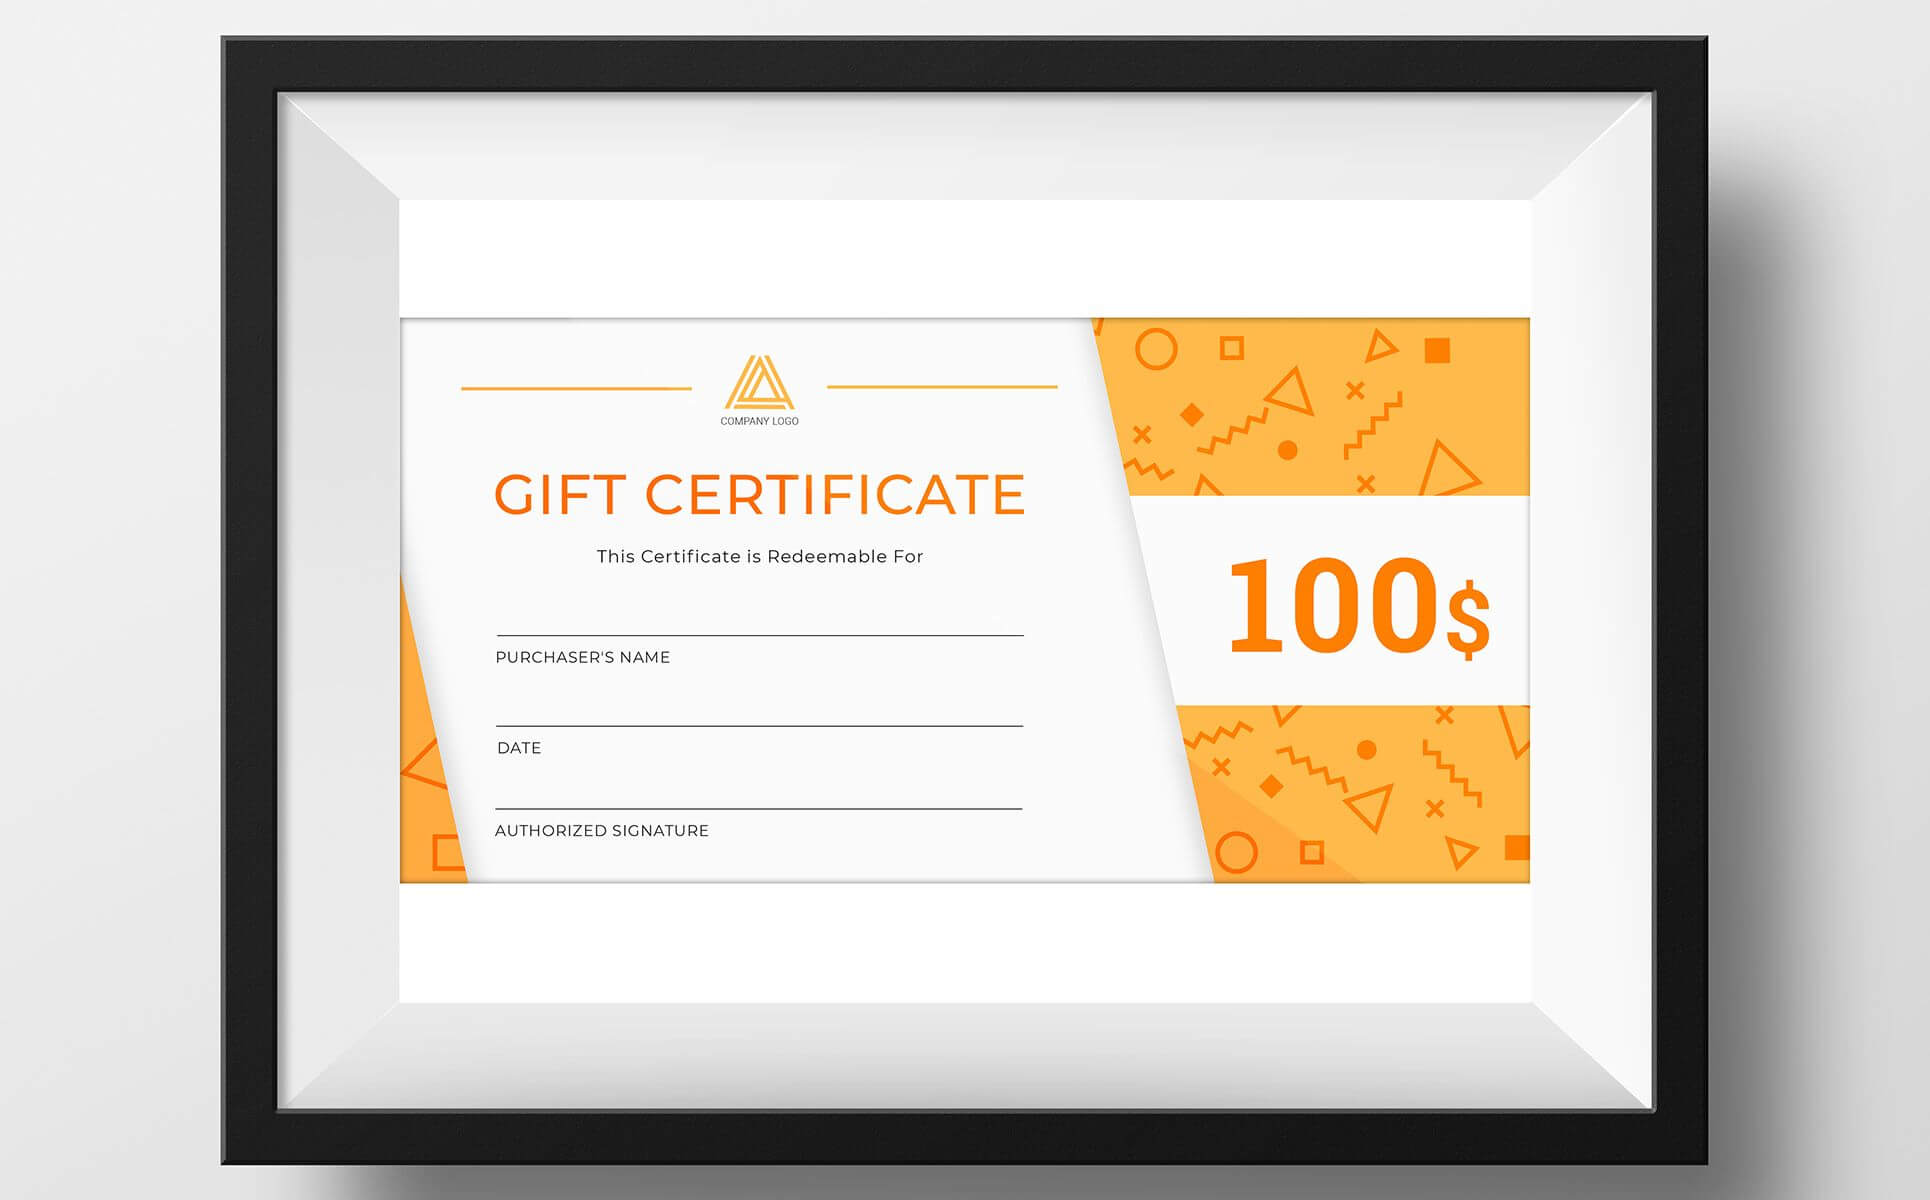 Gift Certificate Template | Design Illustration Art Intended For Company Gift Certificate Template